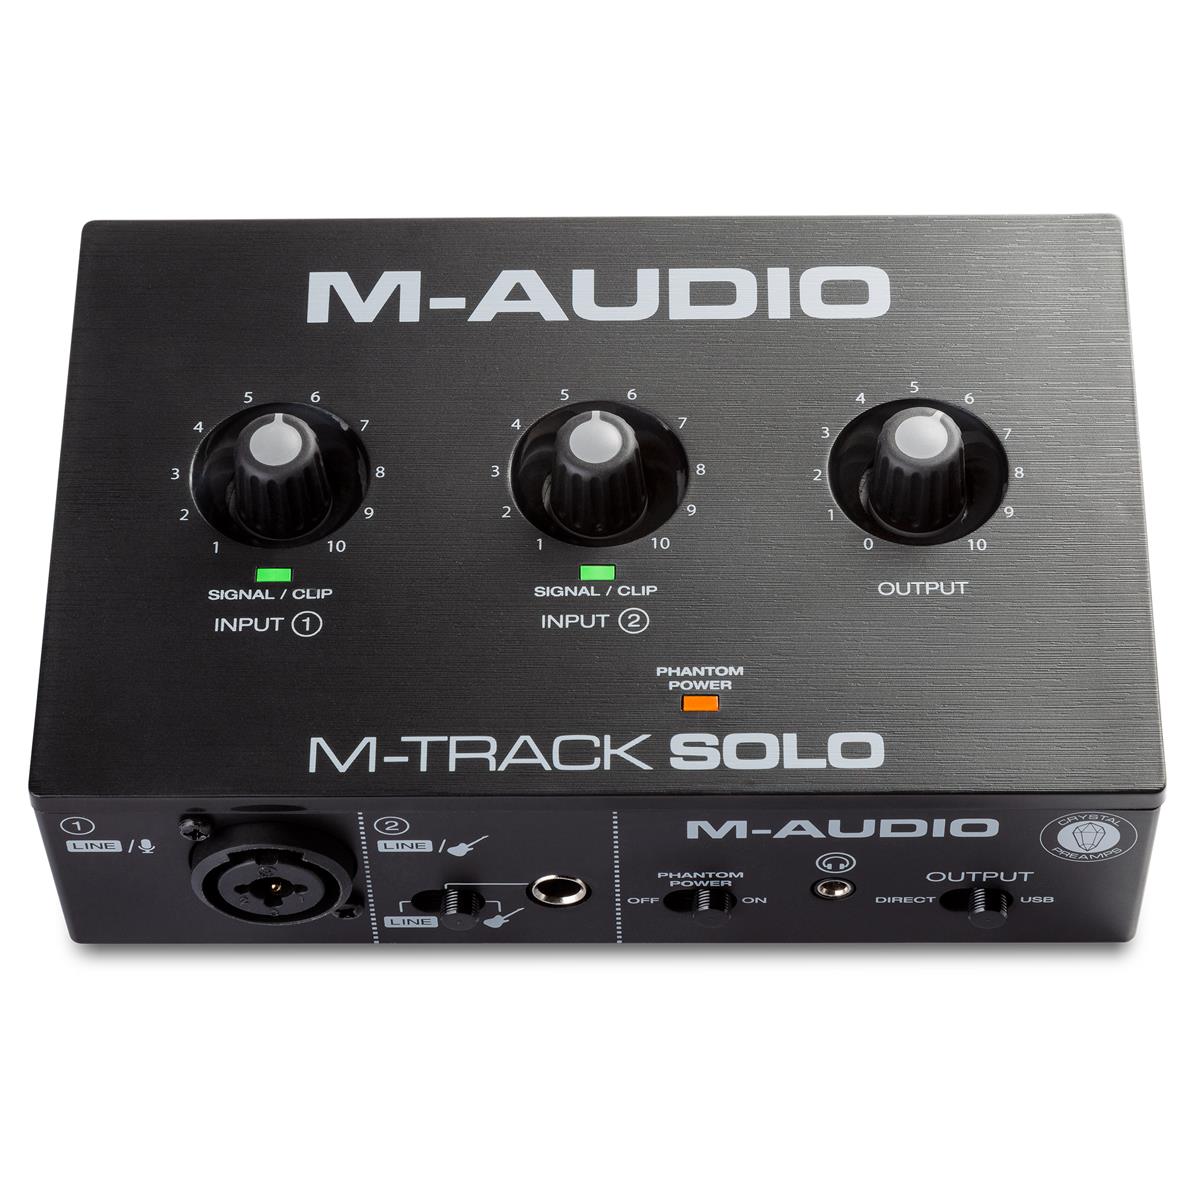 M-Audio MTRACKSOLOII